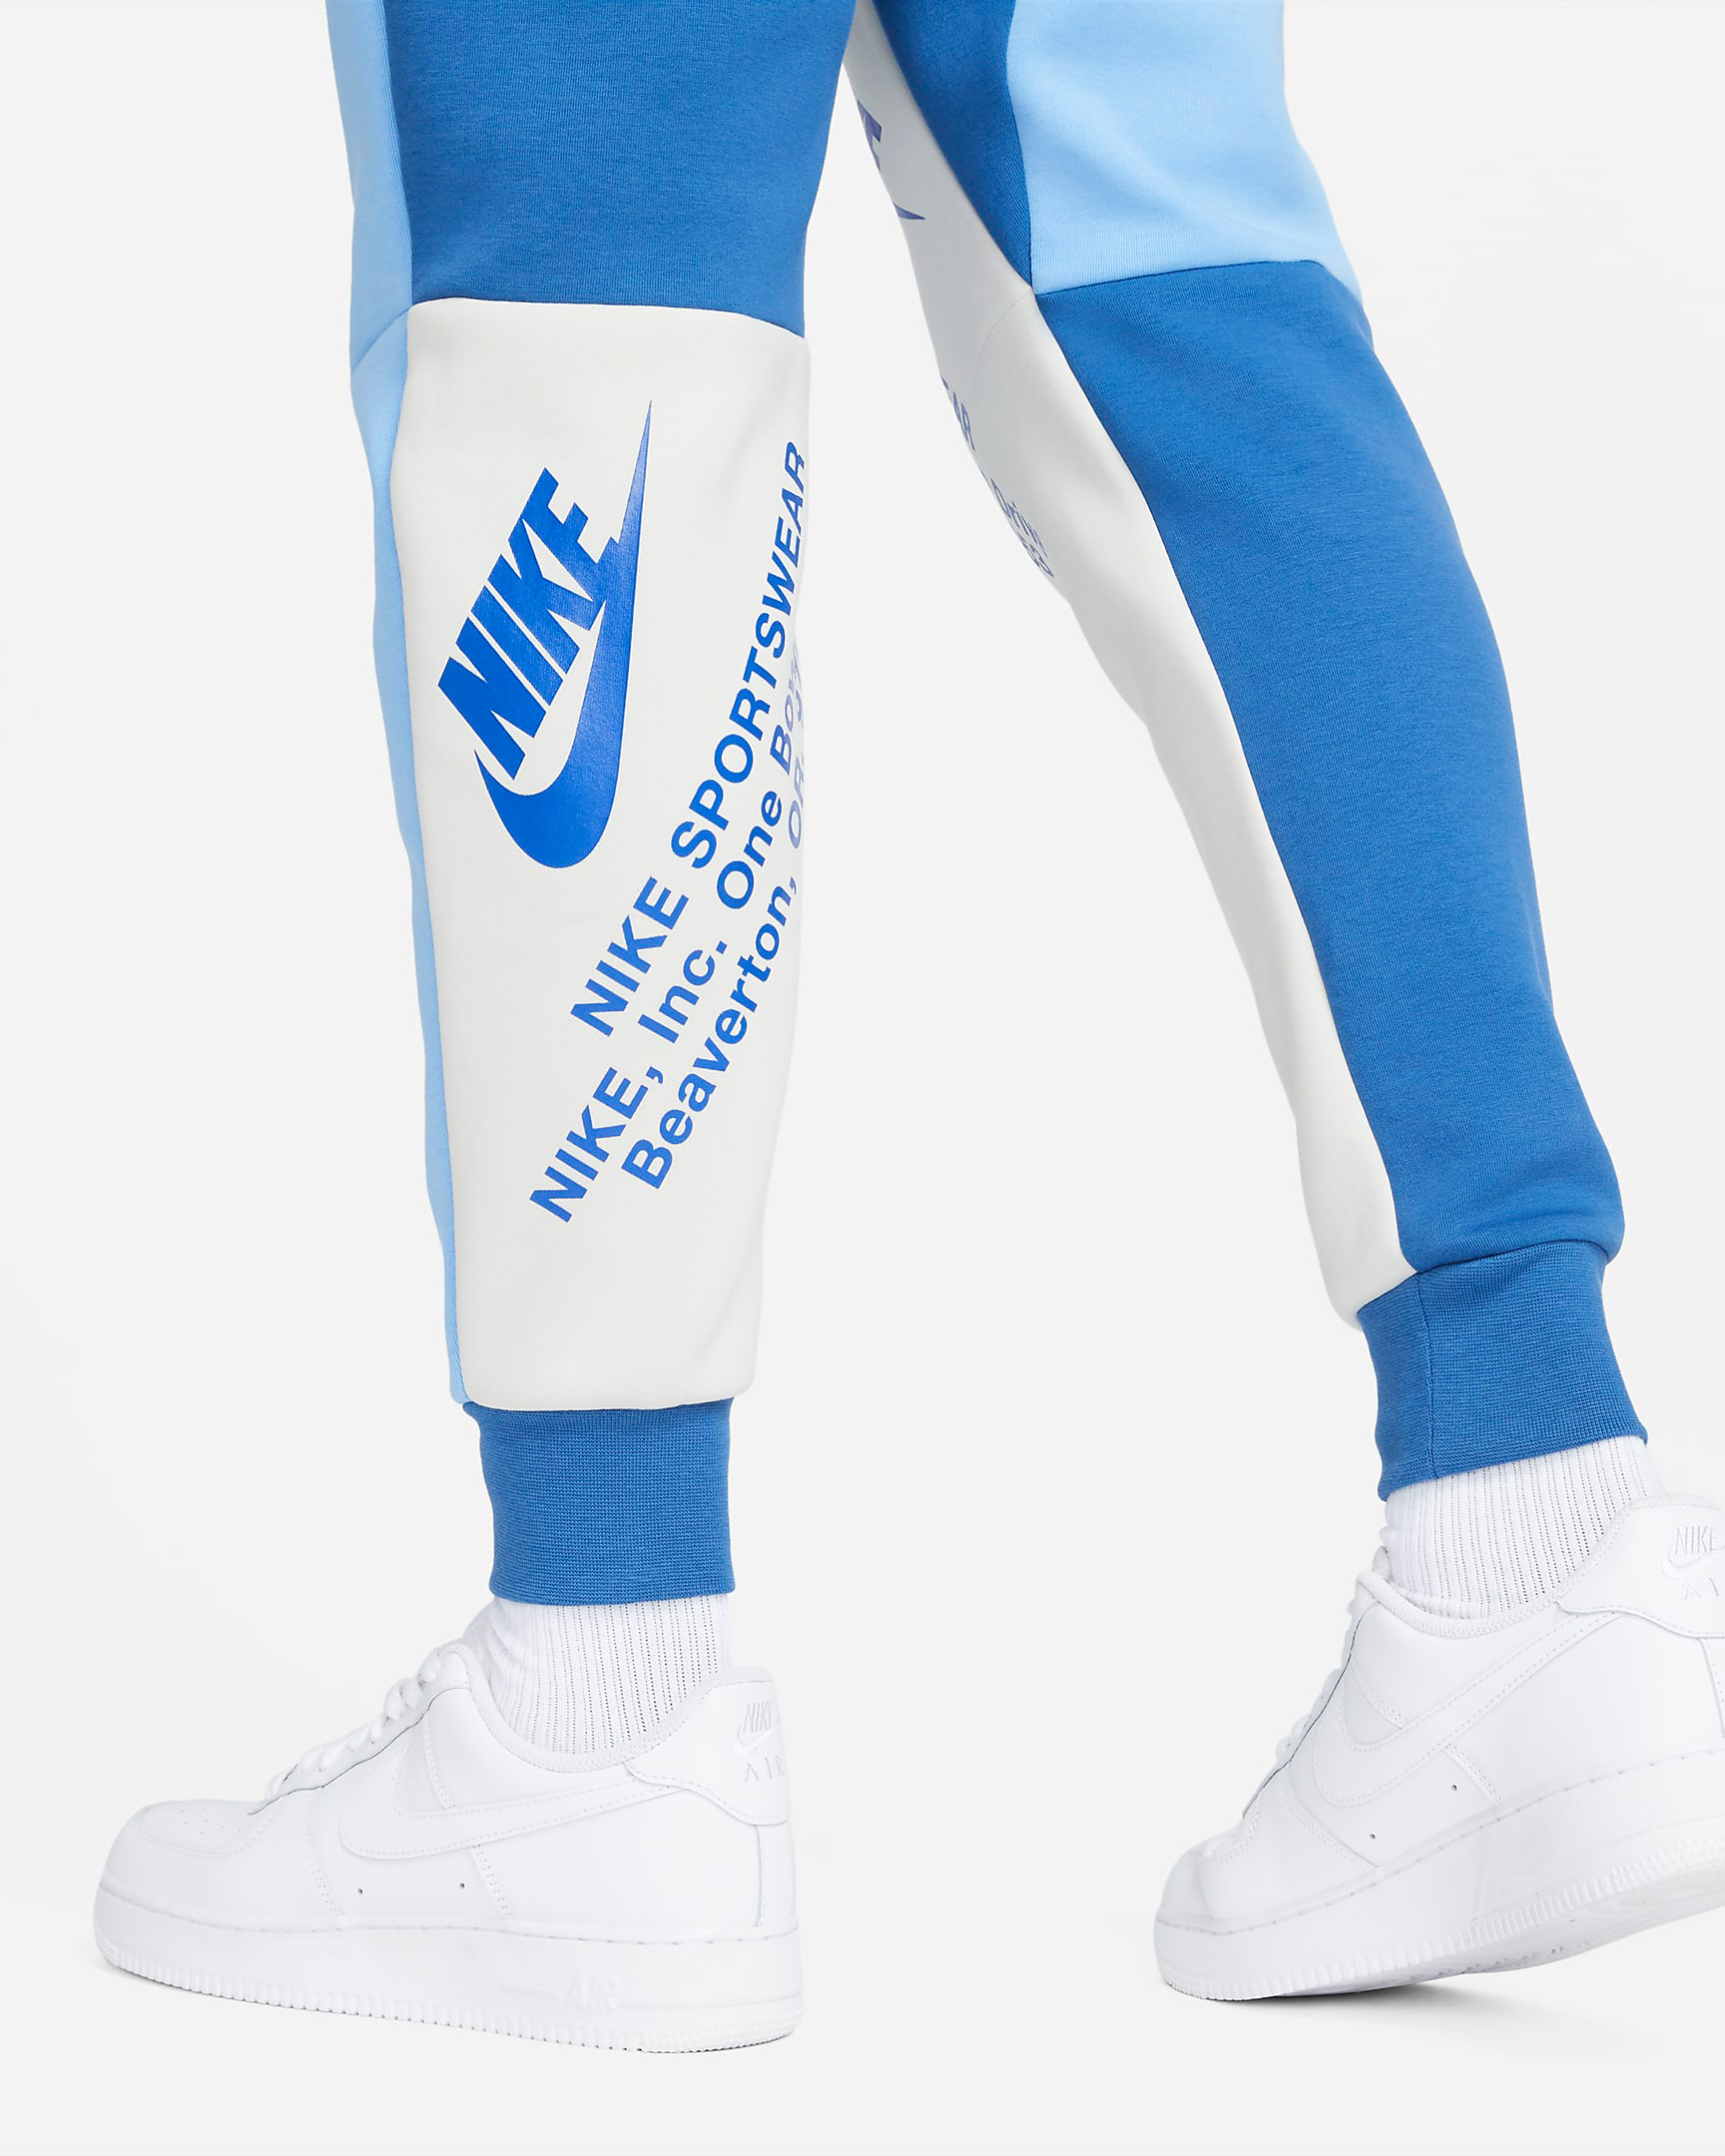 nike-tech-fleece-graphic-joggers-dark-marina-blue-university-blue-game-royal-light-bone-5